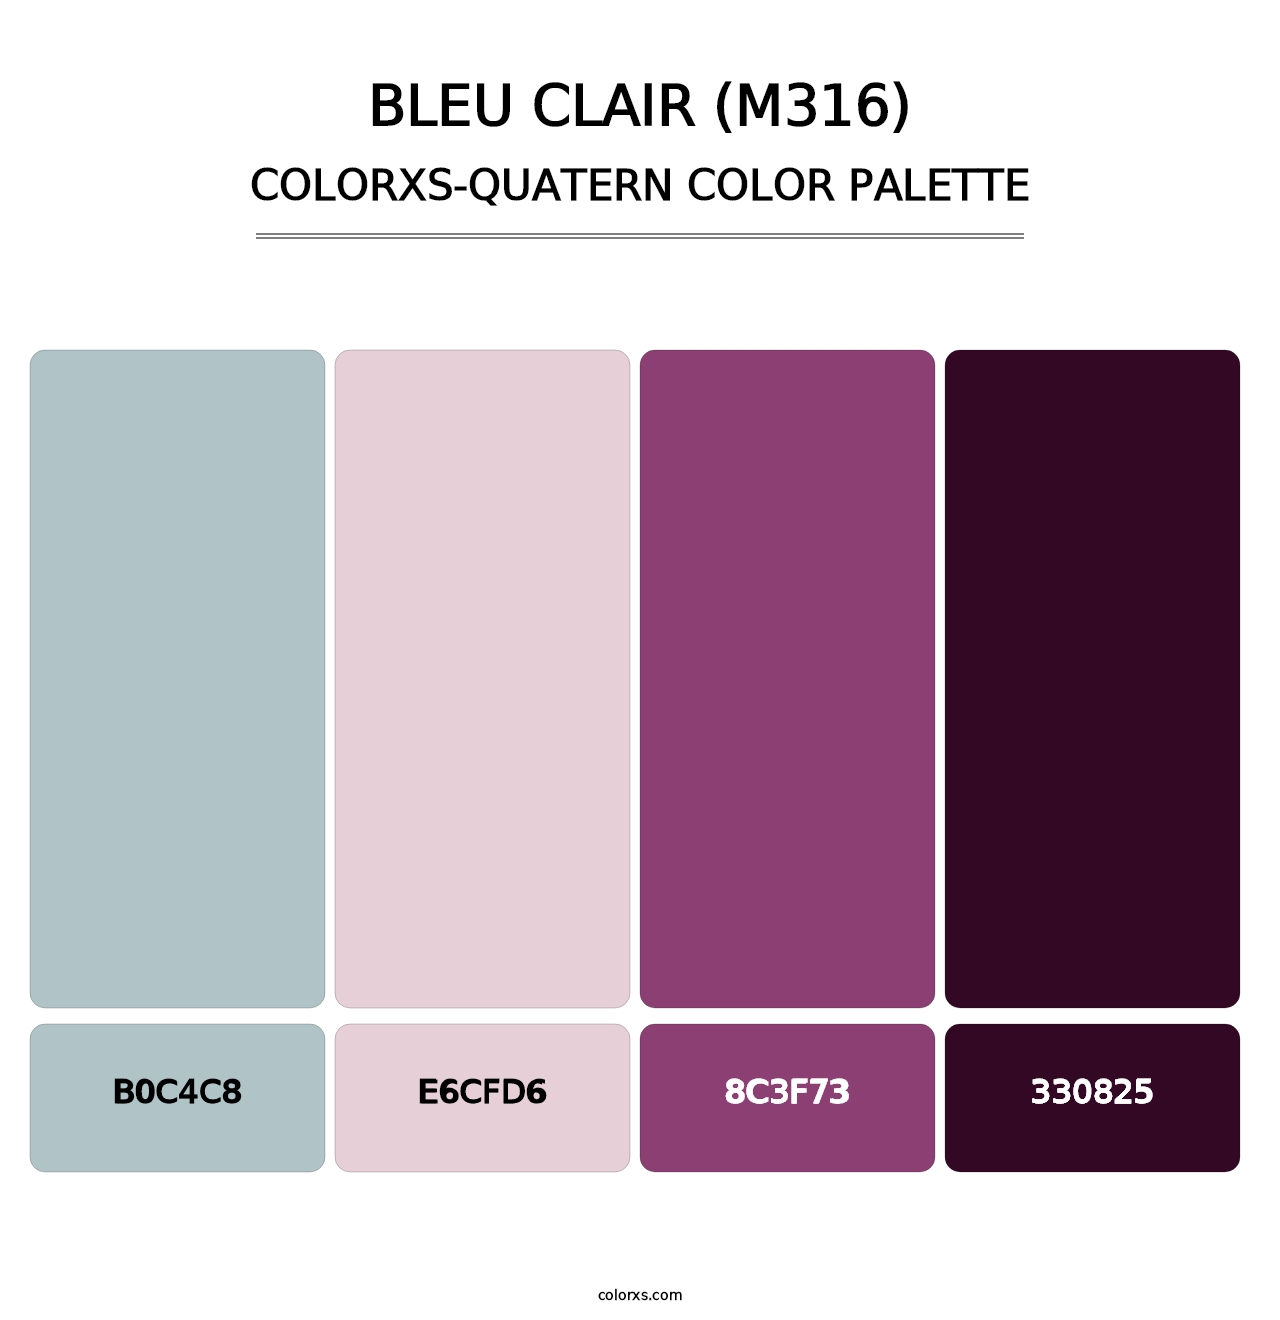 Bleu Clair (M316) - Colorxs Quatern Palette